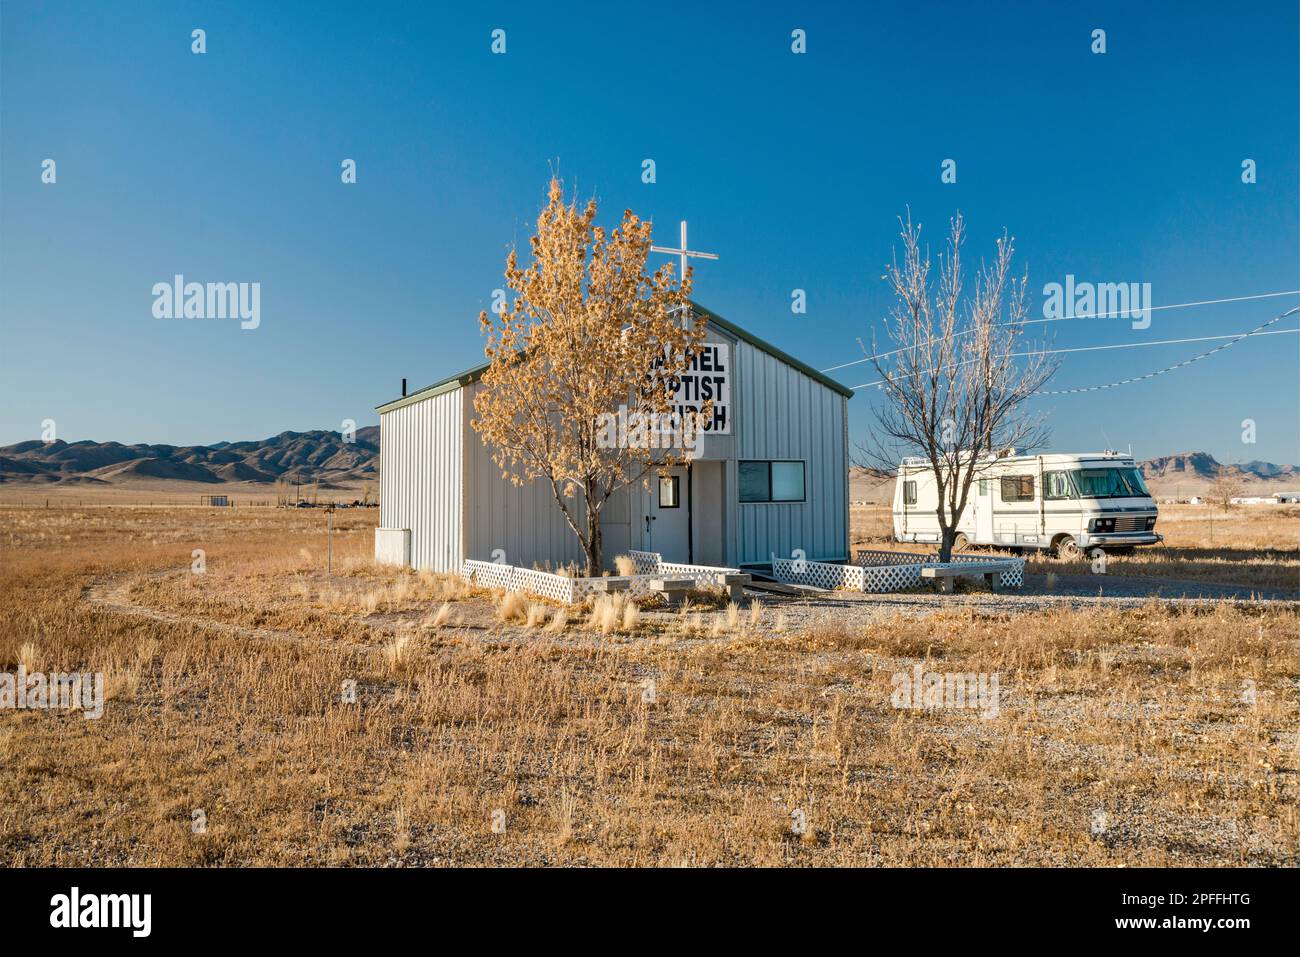 Rachel Baptist Church in Rachel, Extraterrestrial Highway NV-375, Sand Spring Valley, Great Basin, Nevada, USA Stock Photo